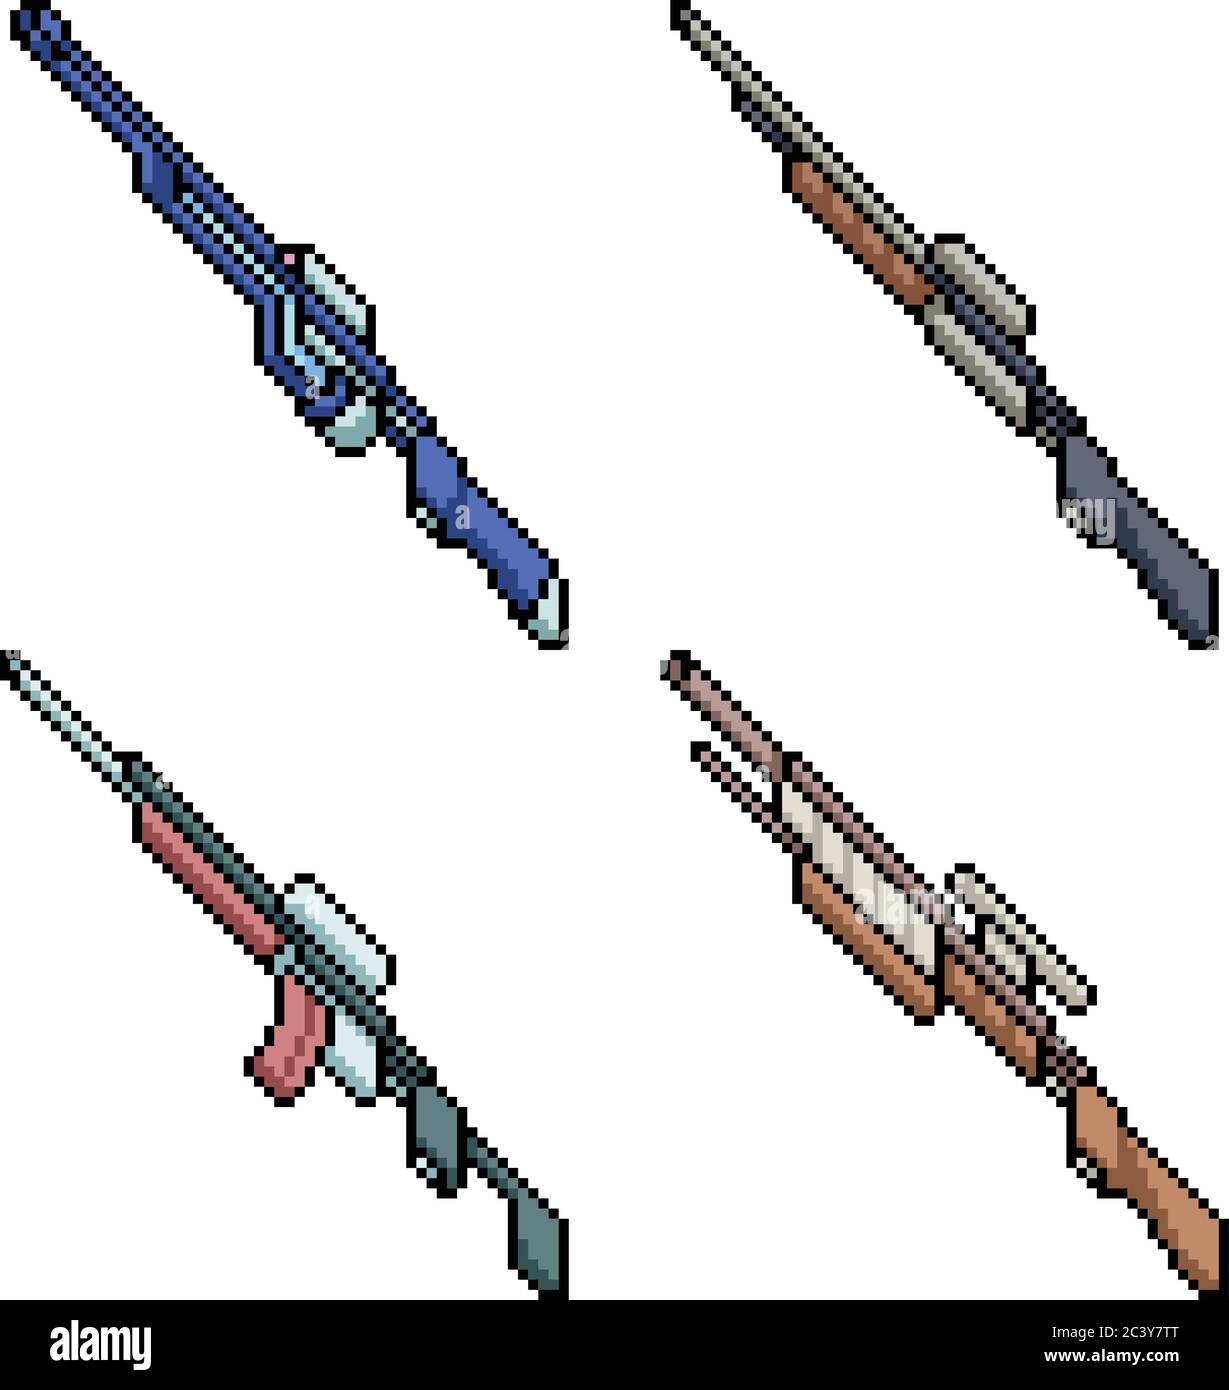 Pixel Art Rifle Gun Graphic by Muhammad Rizky Klinsman · Creative Fabrica